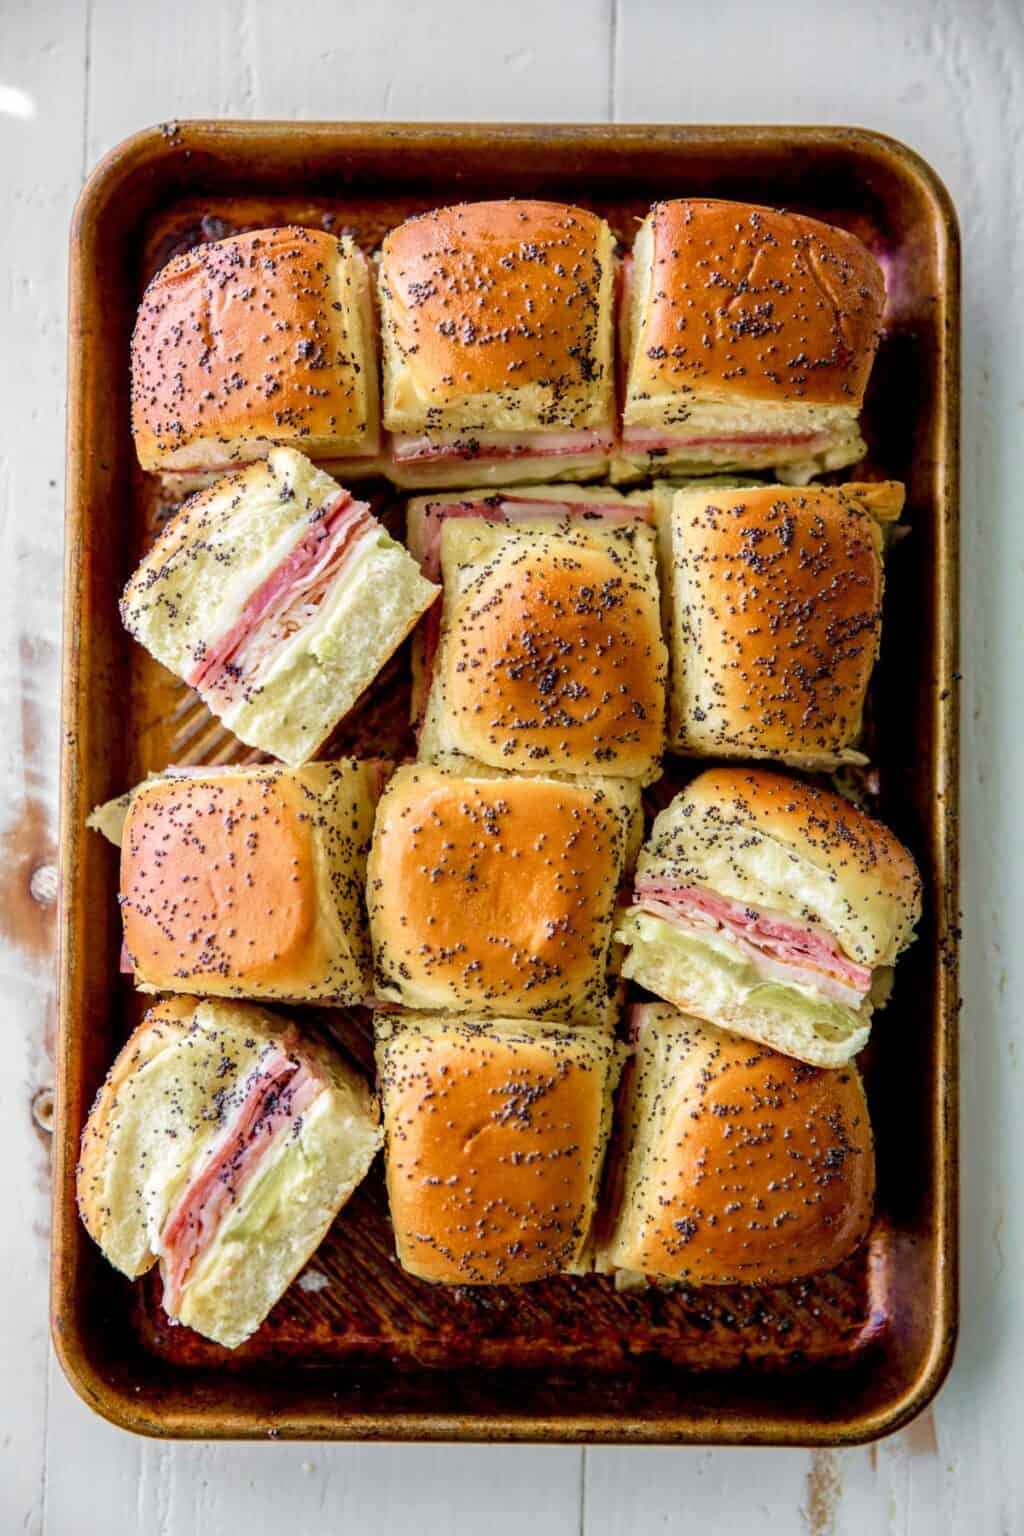 Sheet Pan Cuban Sandwiches (Cubanos)